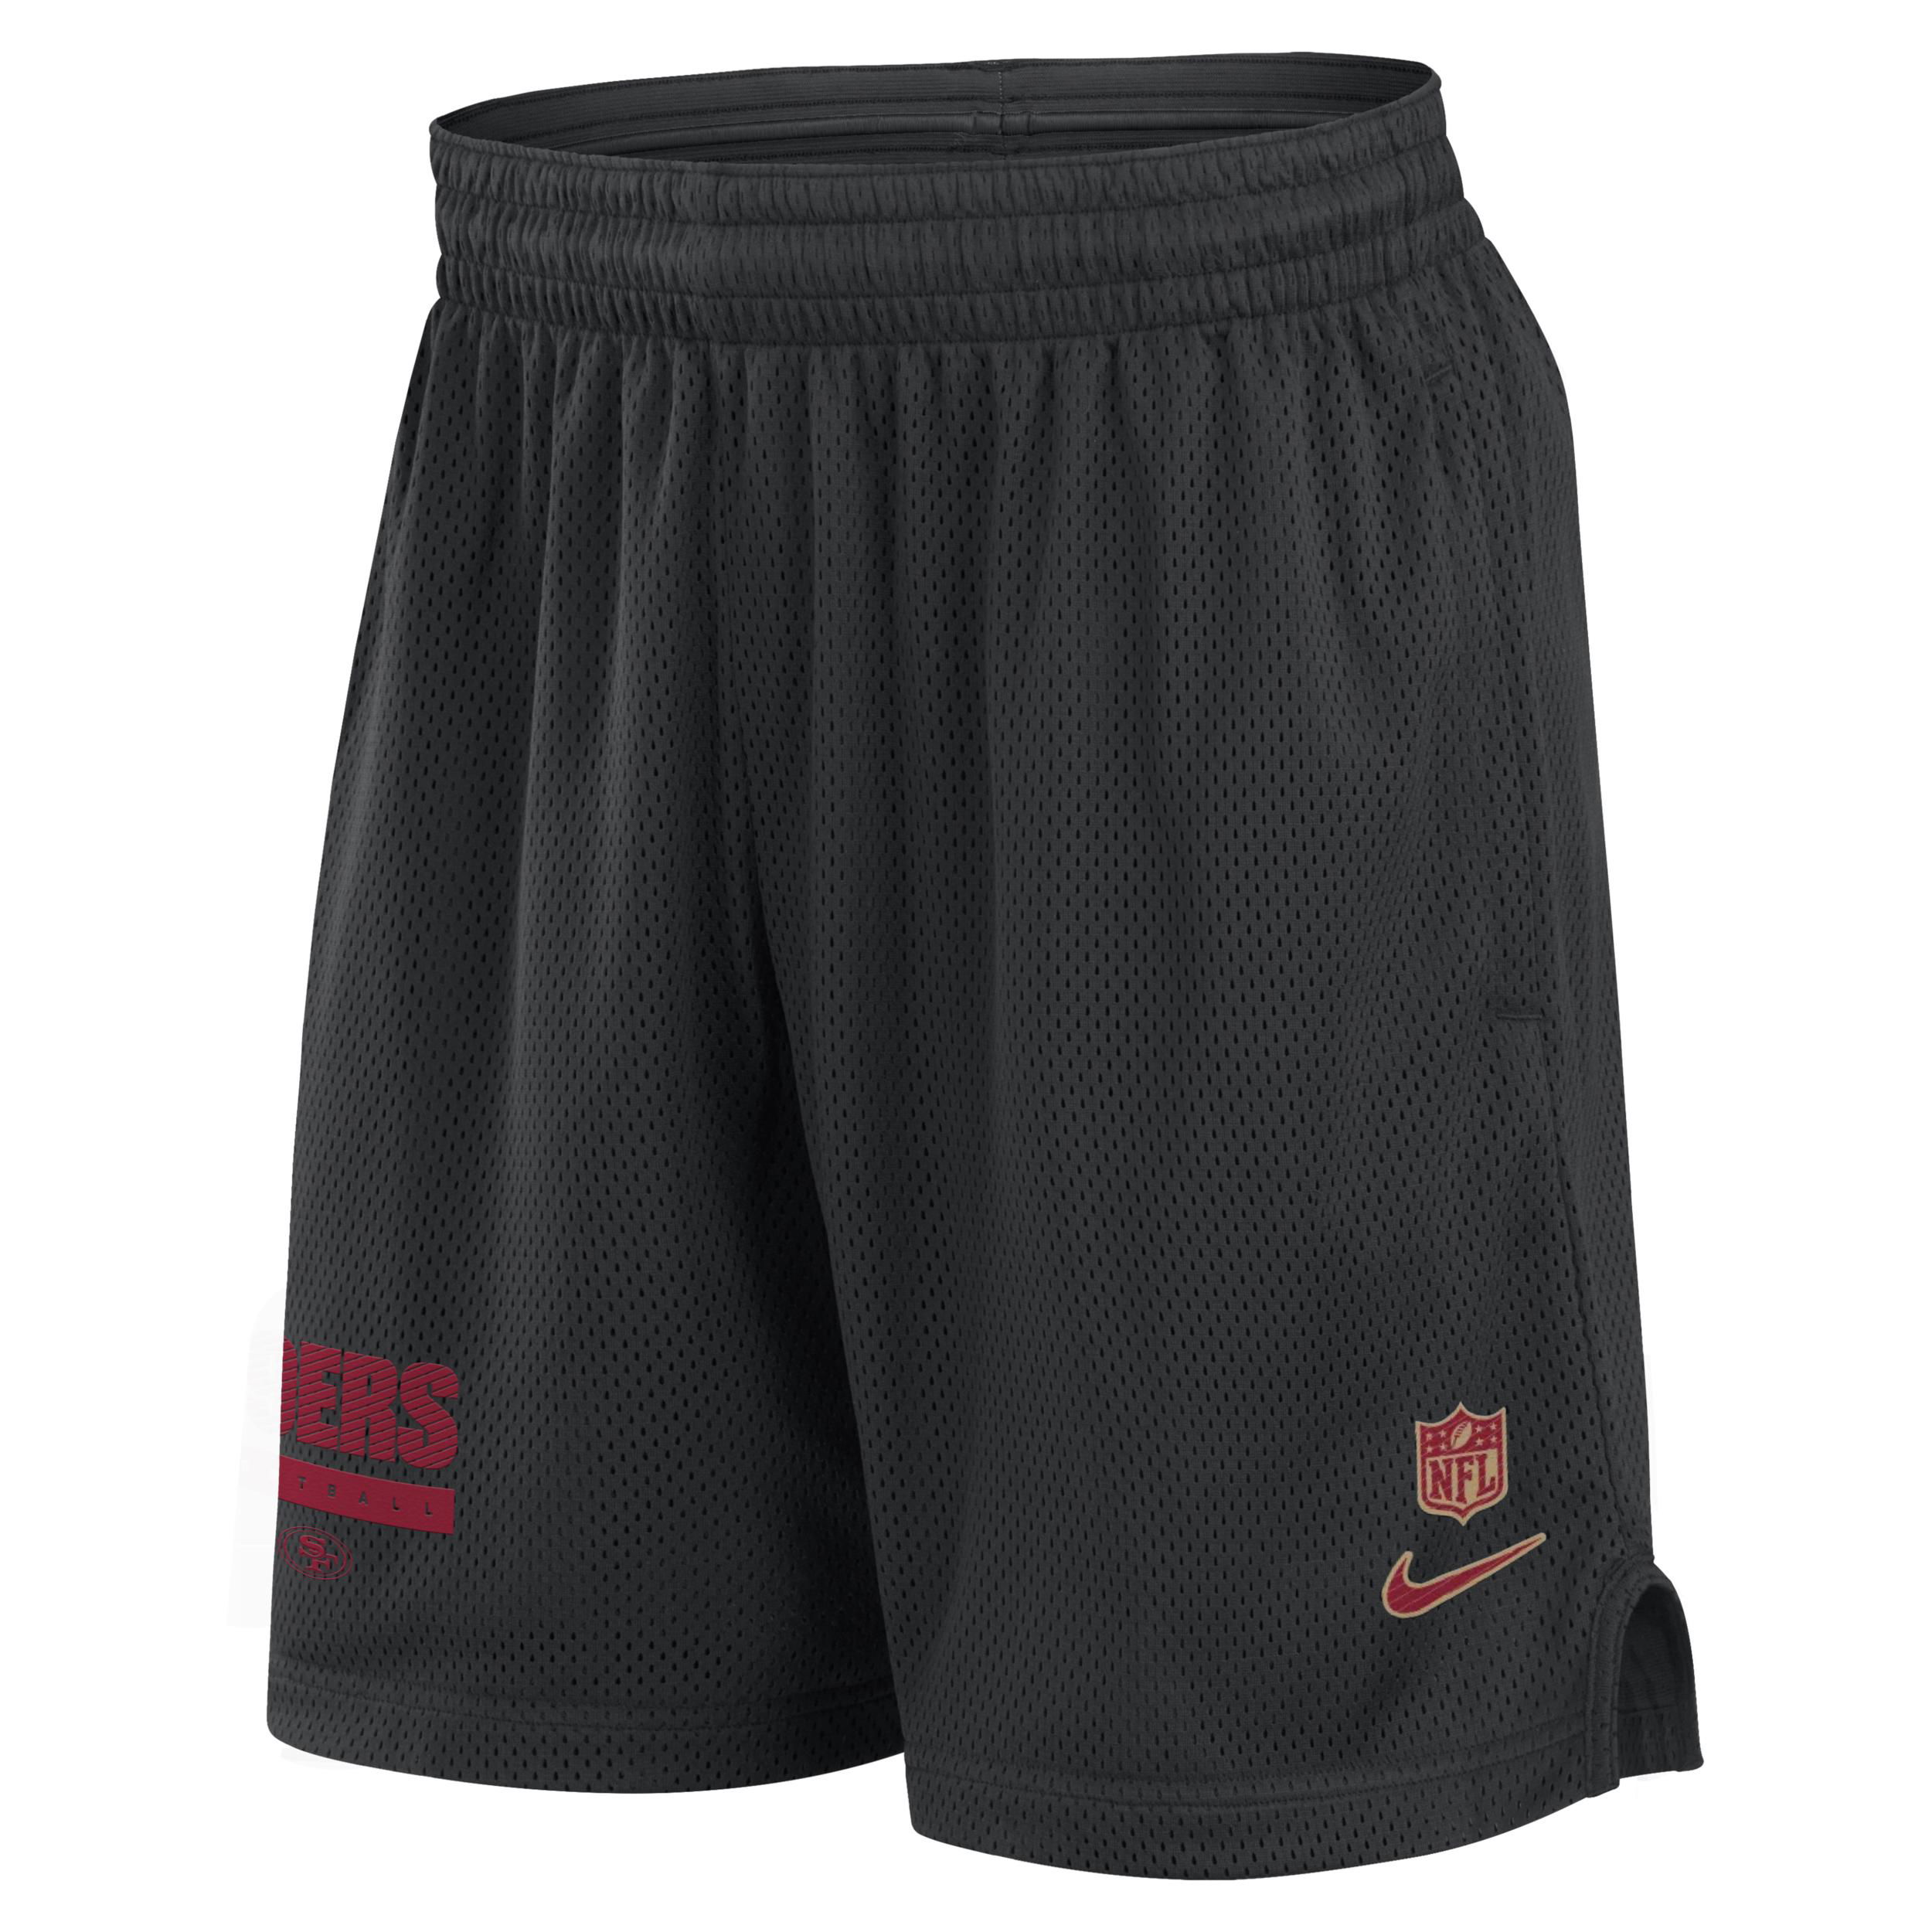 San Francisco 49ers Sideline Nike Men's Dri-FIT NFL Shorts by NIKE